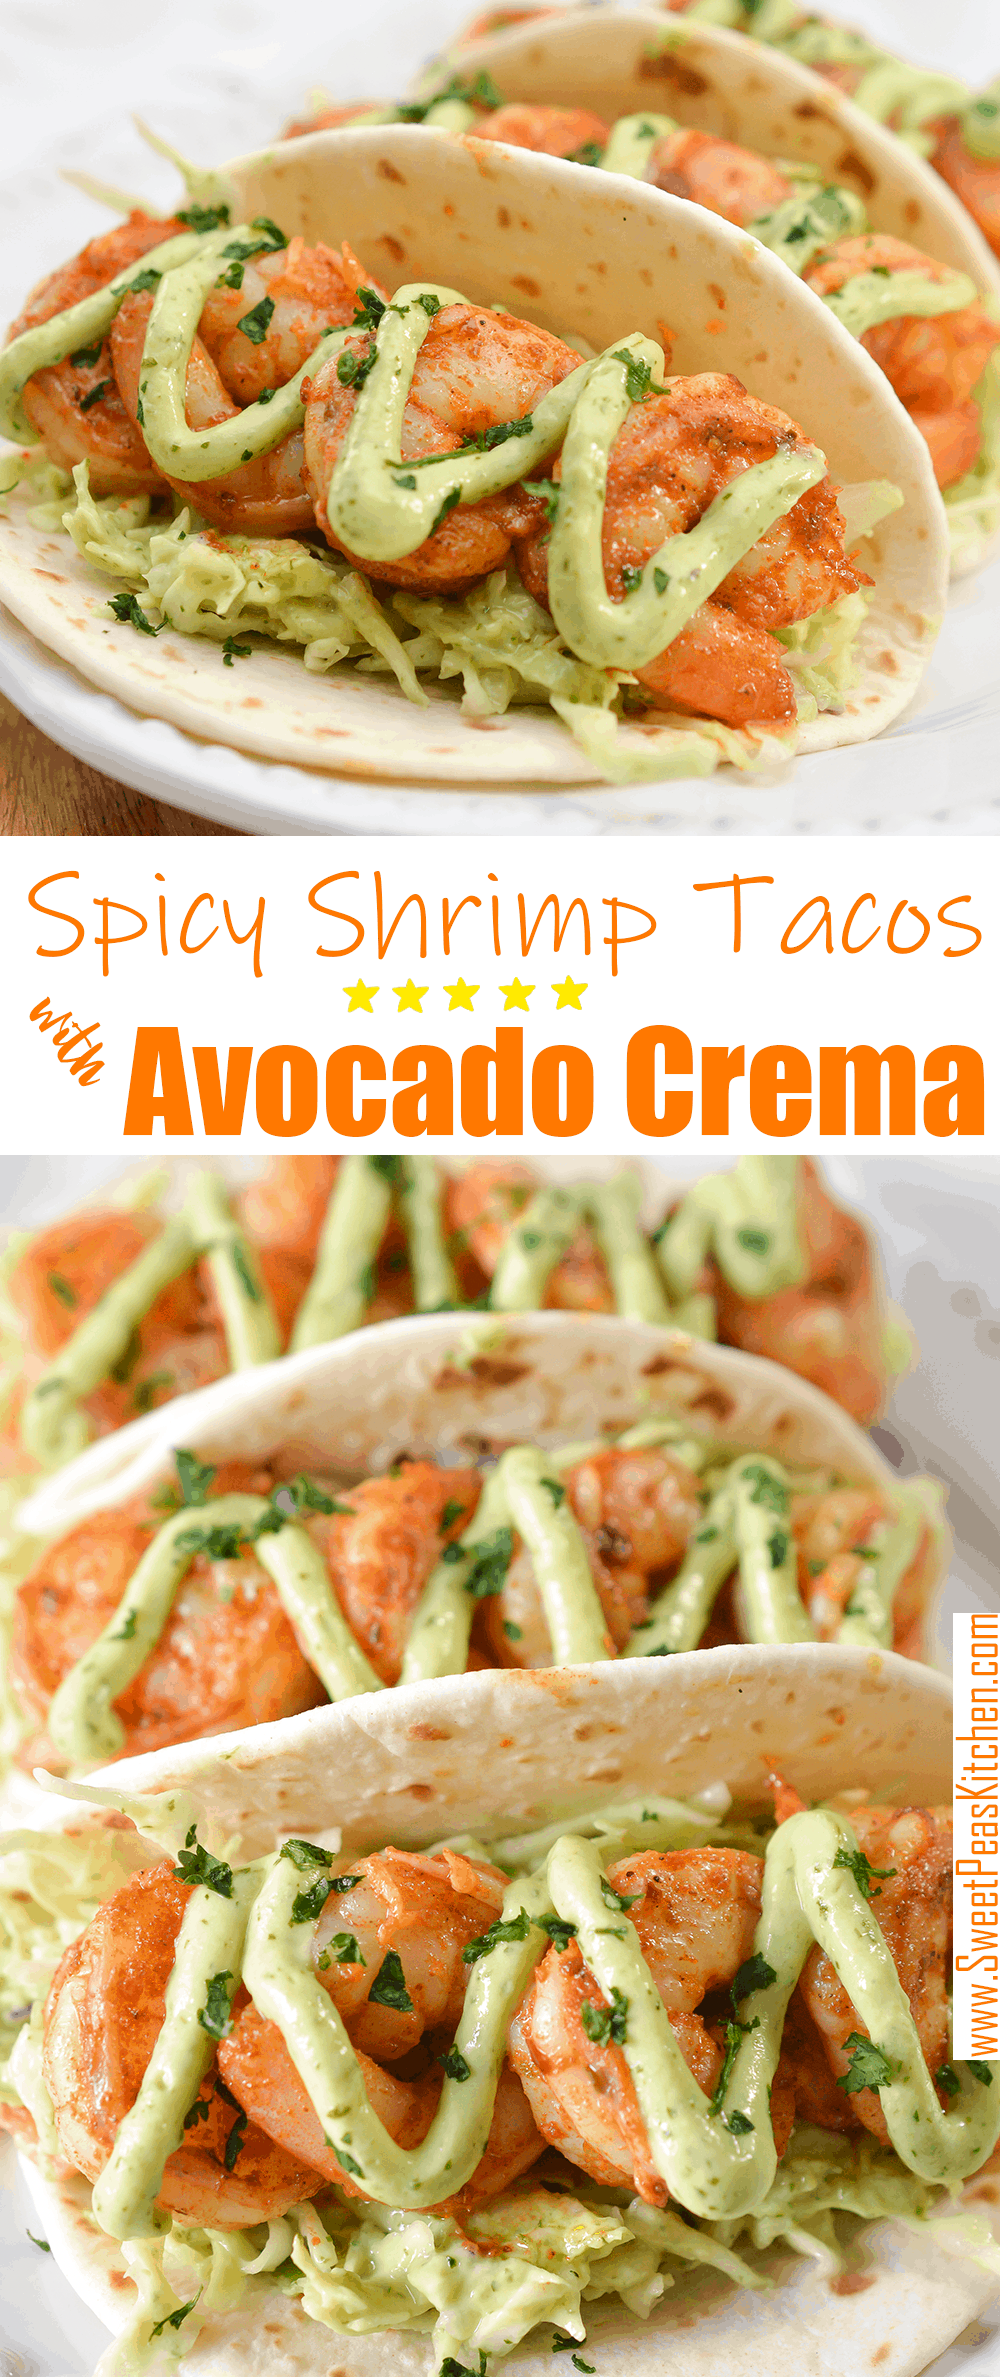 Spicy Shrimp Tacos with Avocado Crema